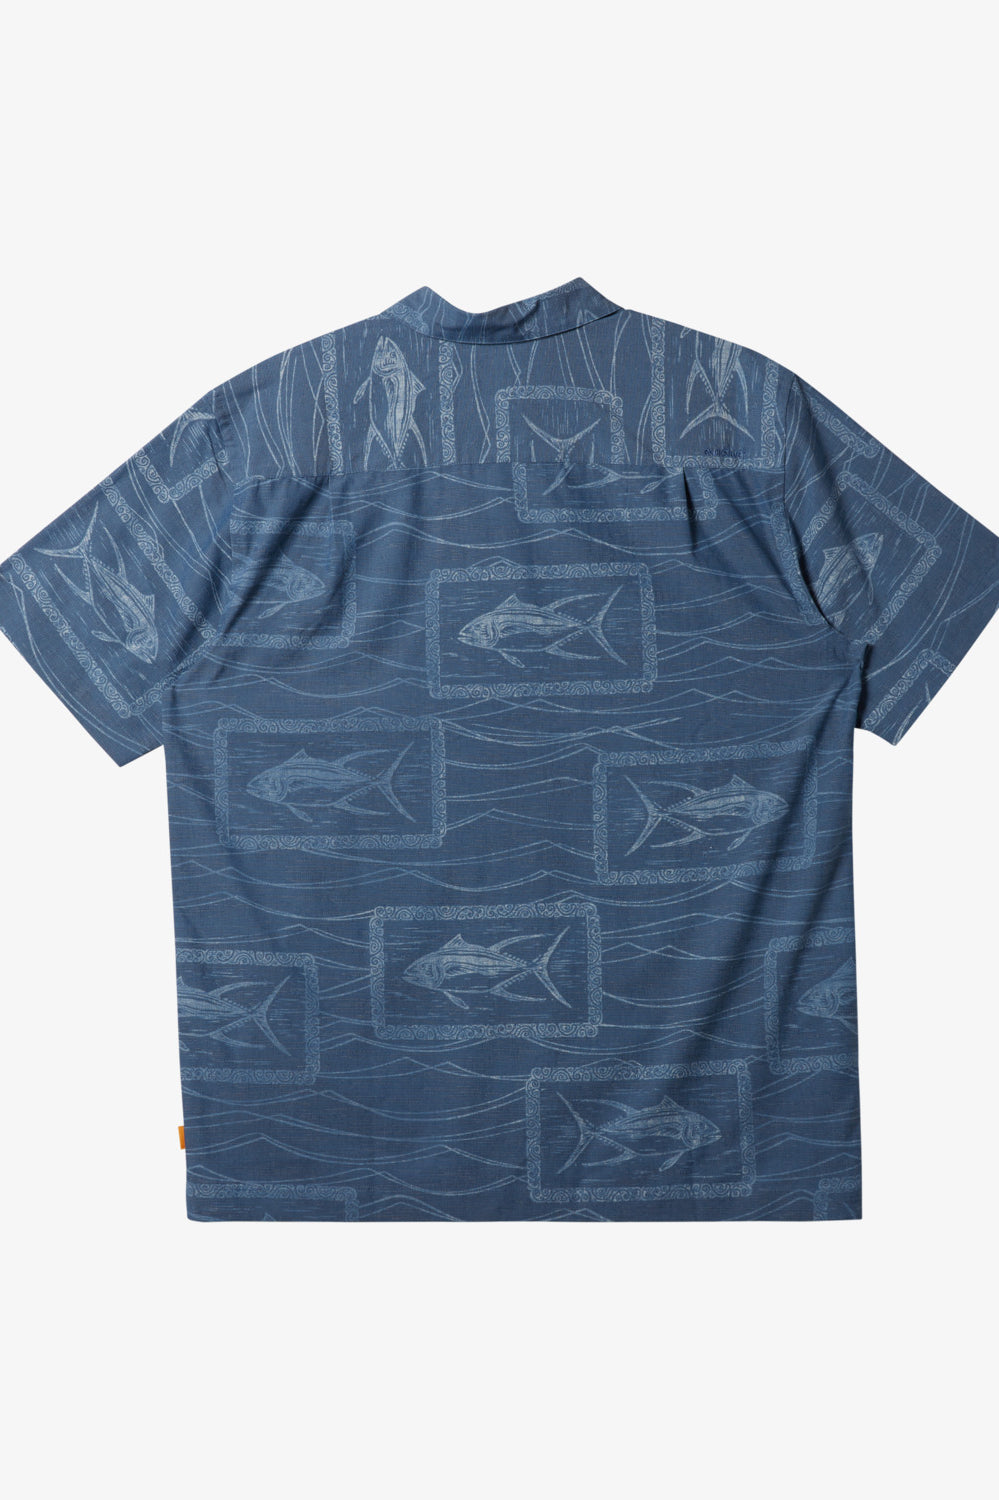 Quiksilver: Waterman Reef Point Woven Shirt